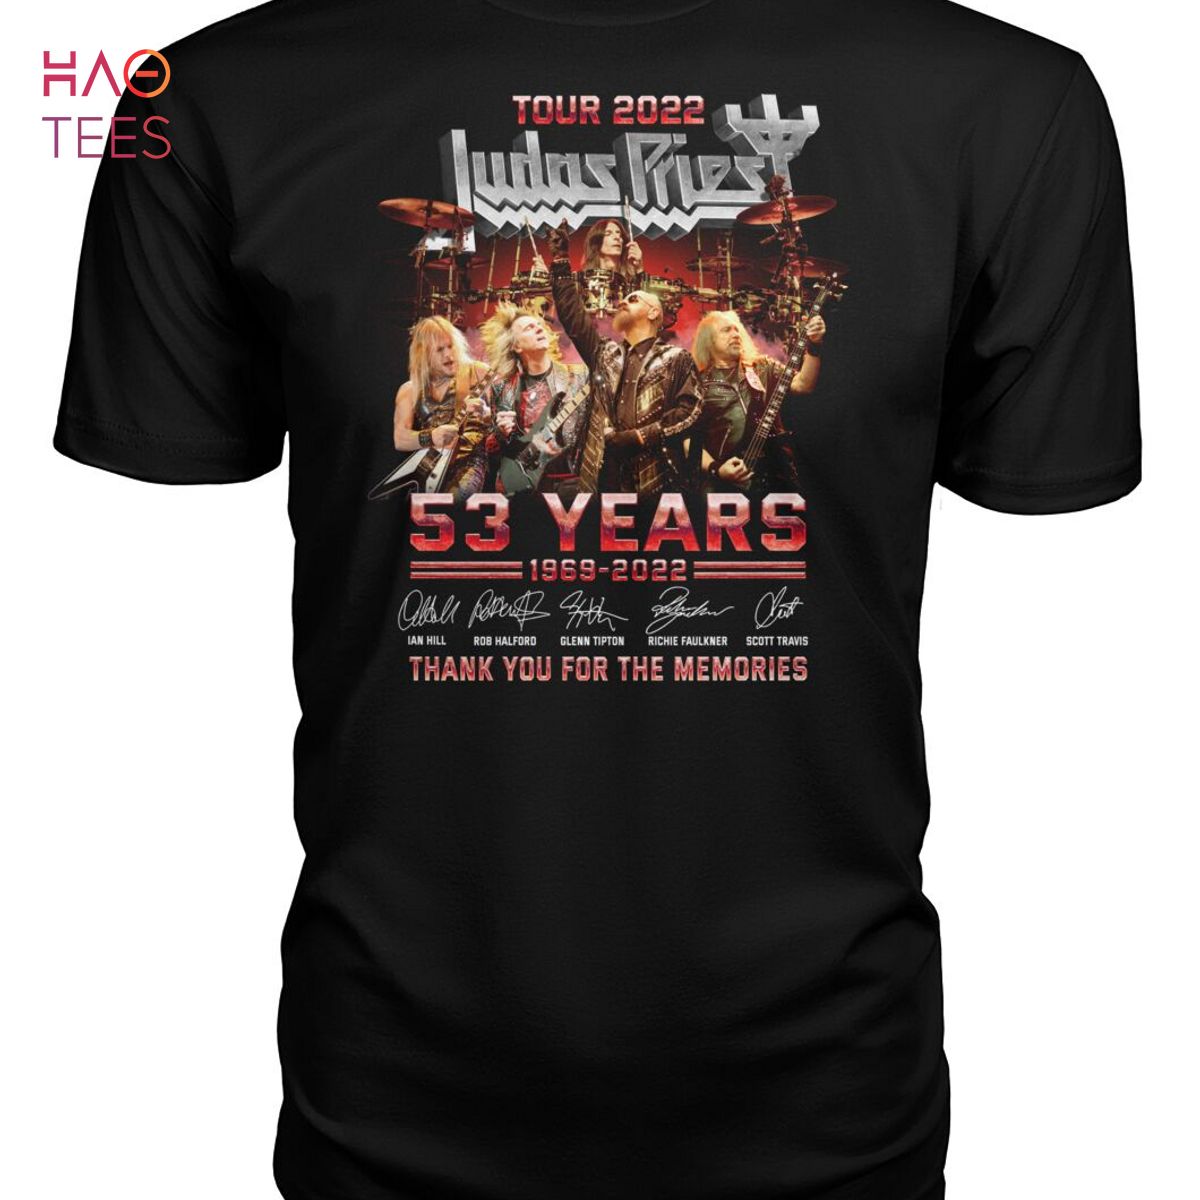 Judas Priest 53 Years 1969-2022 Shirt